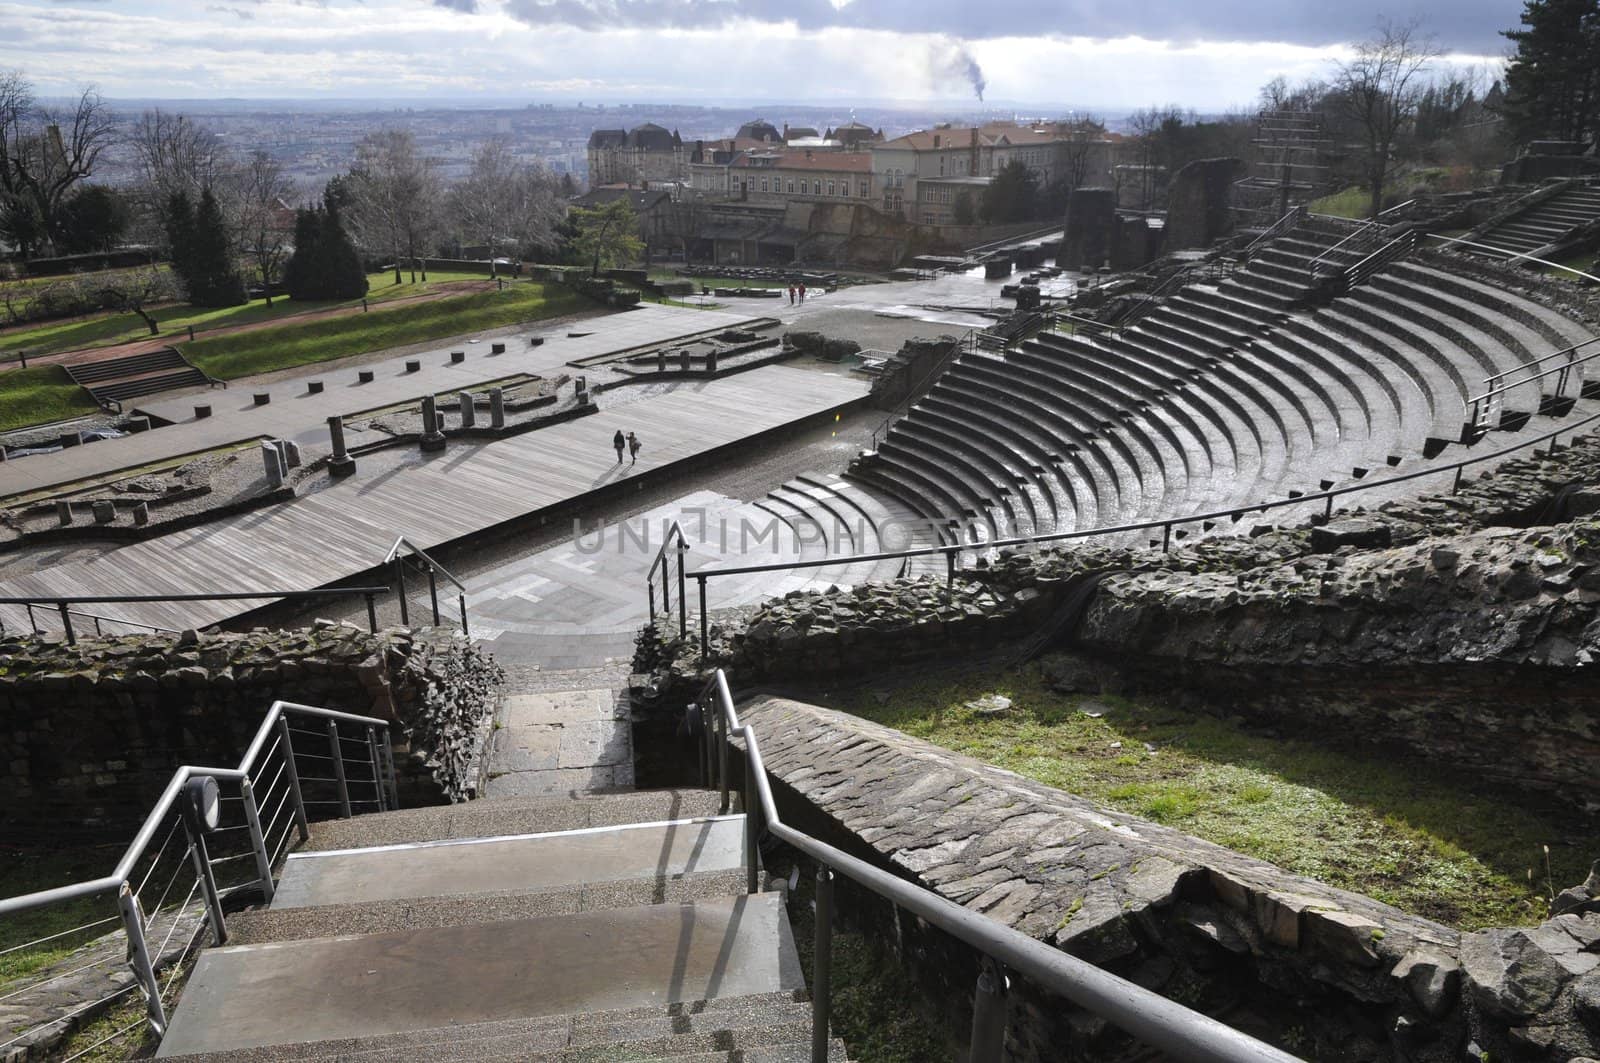 Wide view of a Roman theatre in Lyon city